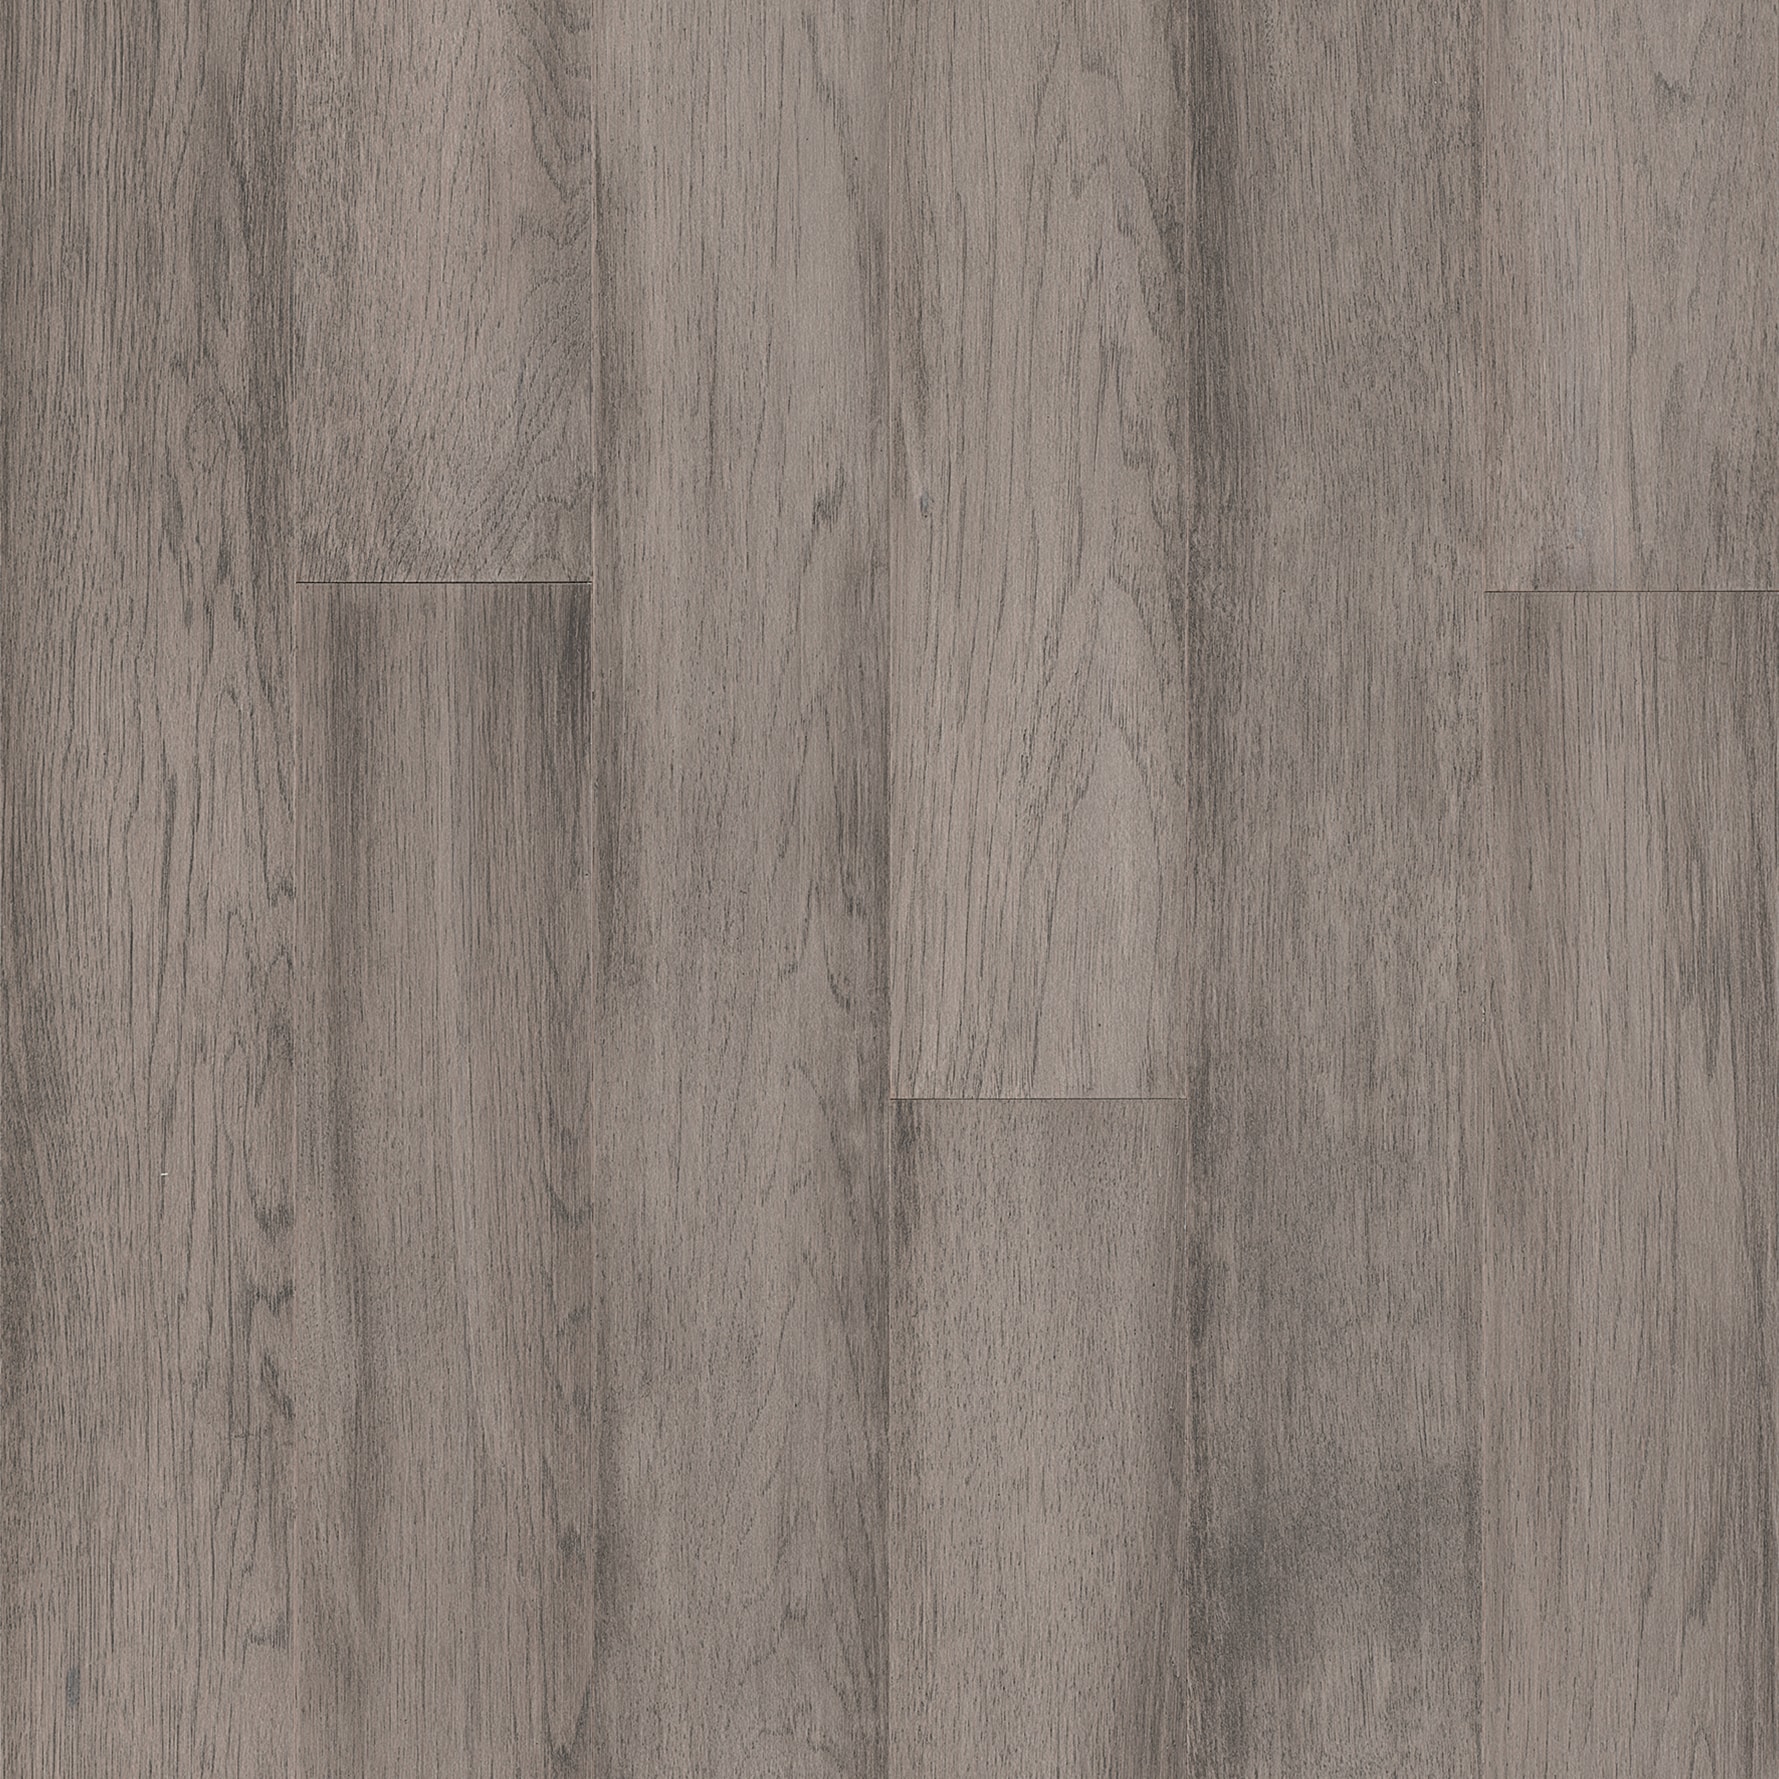 Light gray hardwood floor